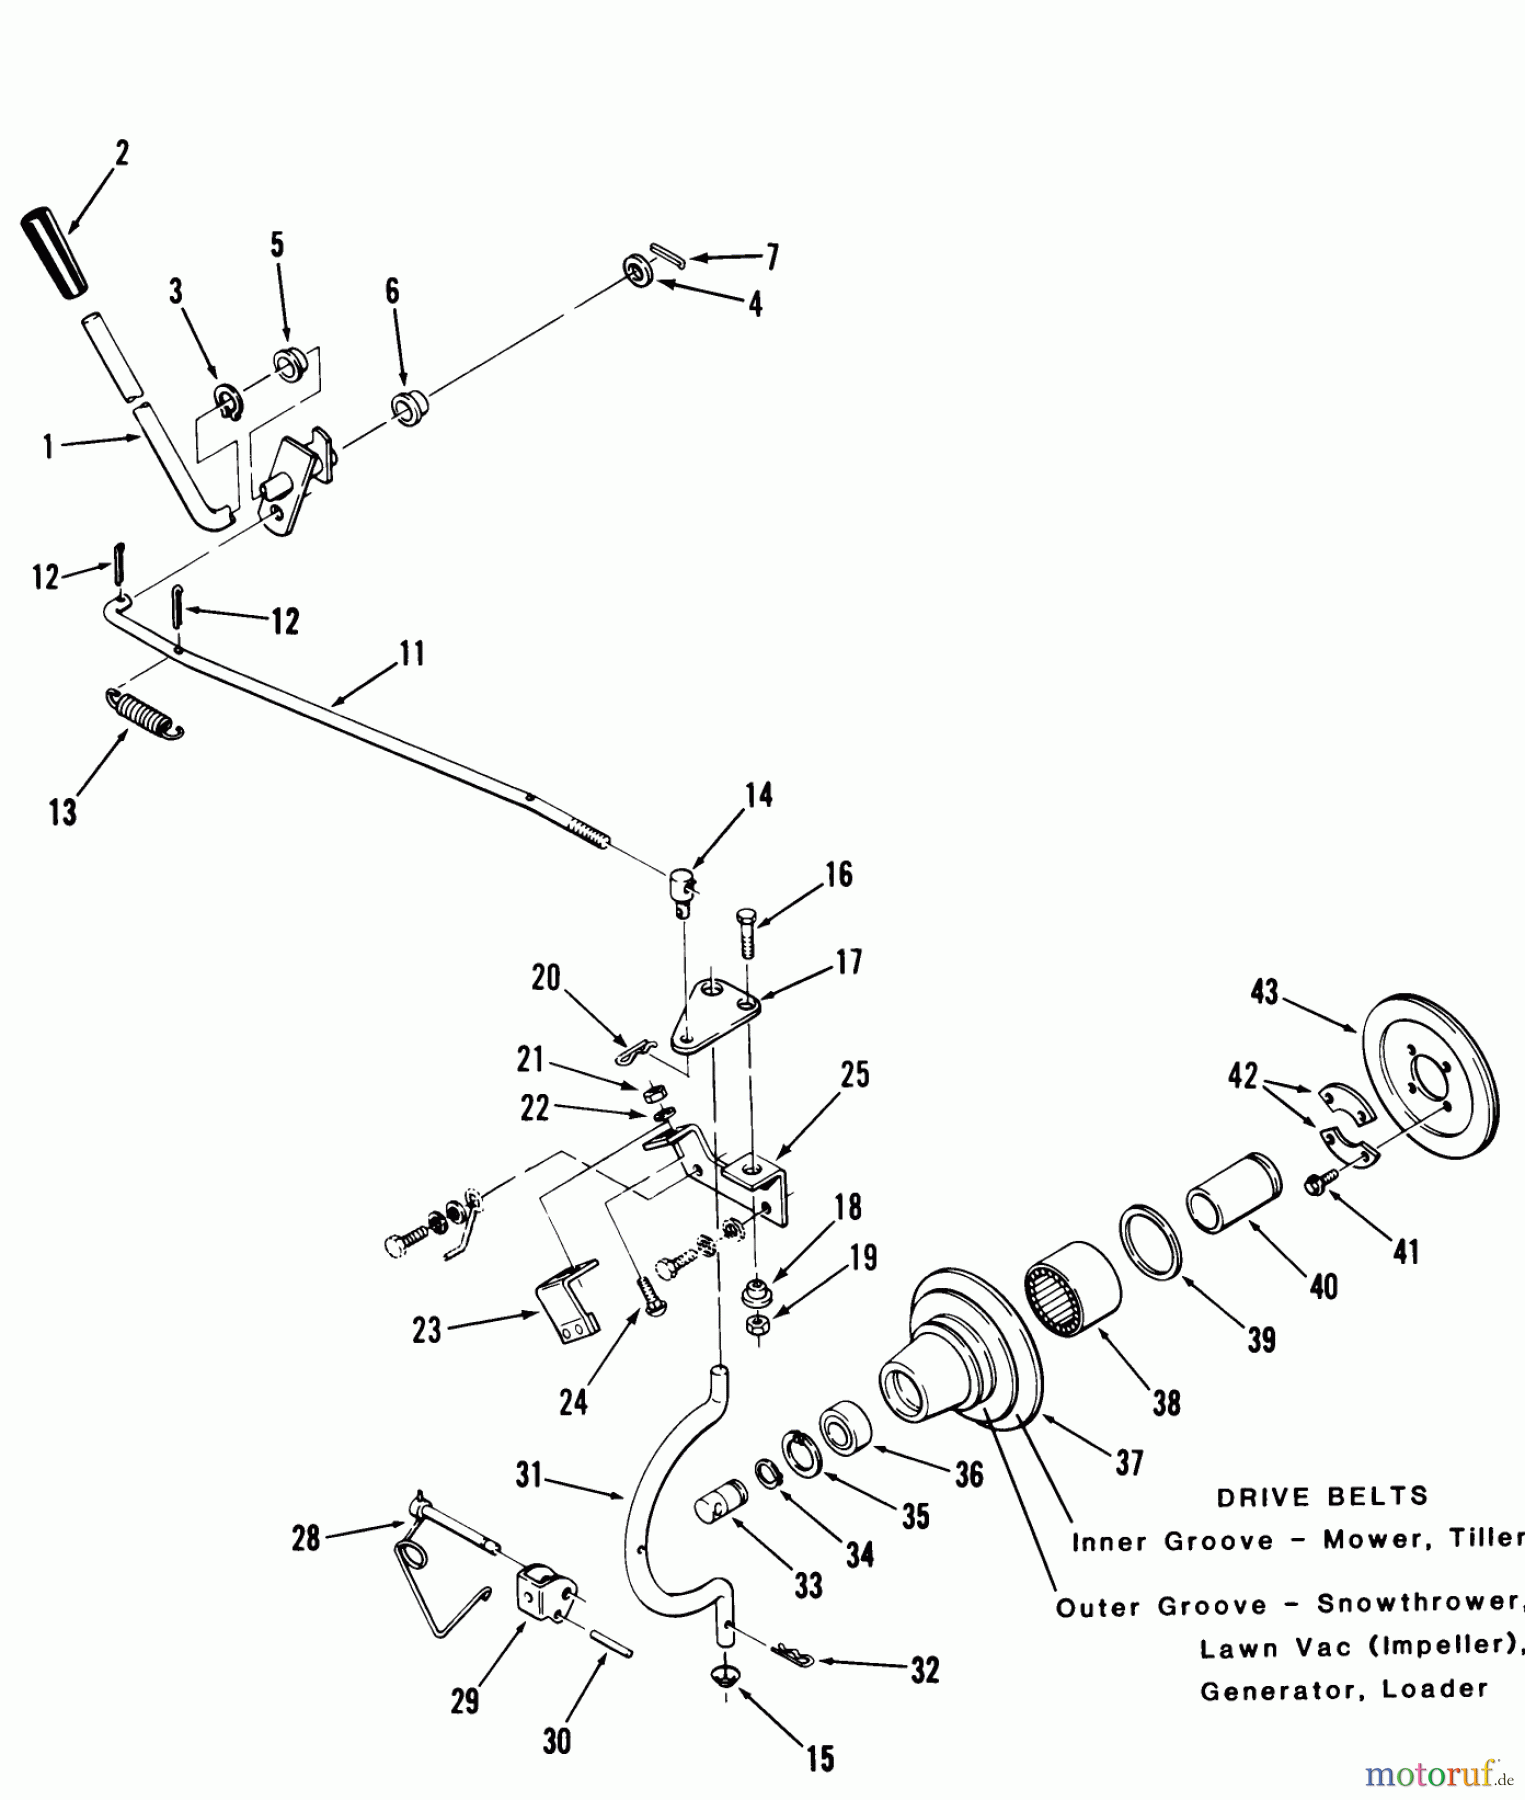  Toro Neu Mowers, Lawn & Garden Tractor Seite 1 11-16K801 (C-165) - Toro C-165 8-Speed Tractor, 1984 PTO CLUTCH AND CONTROL